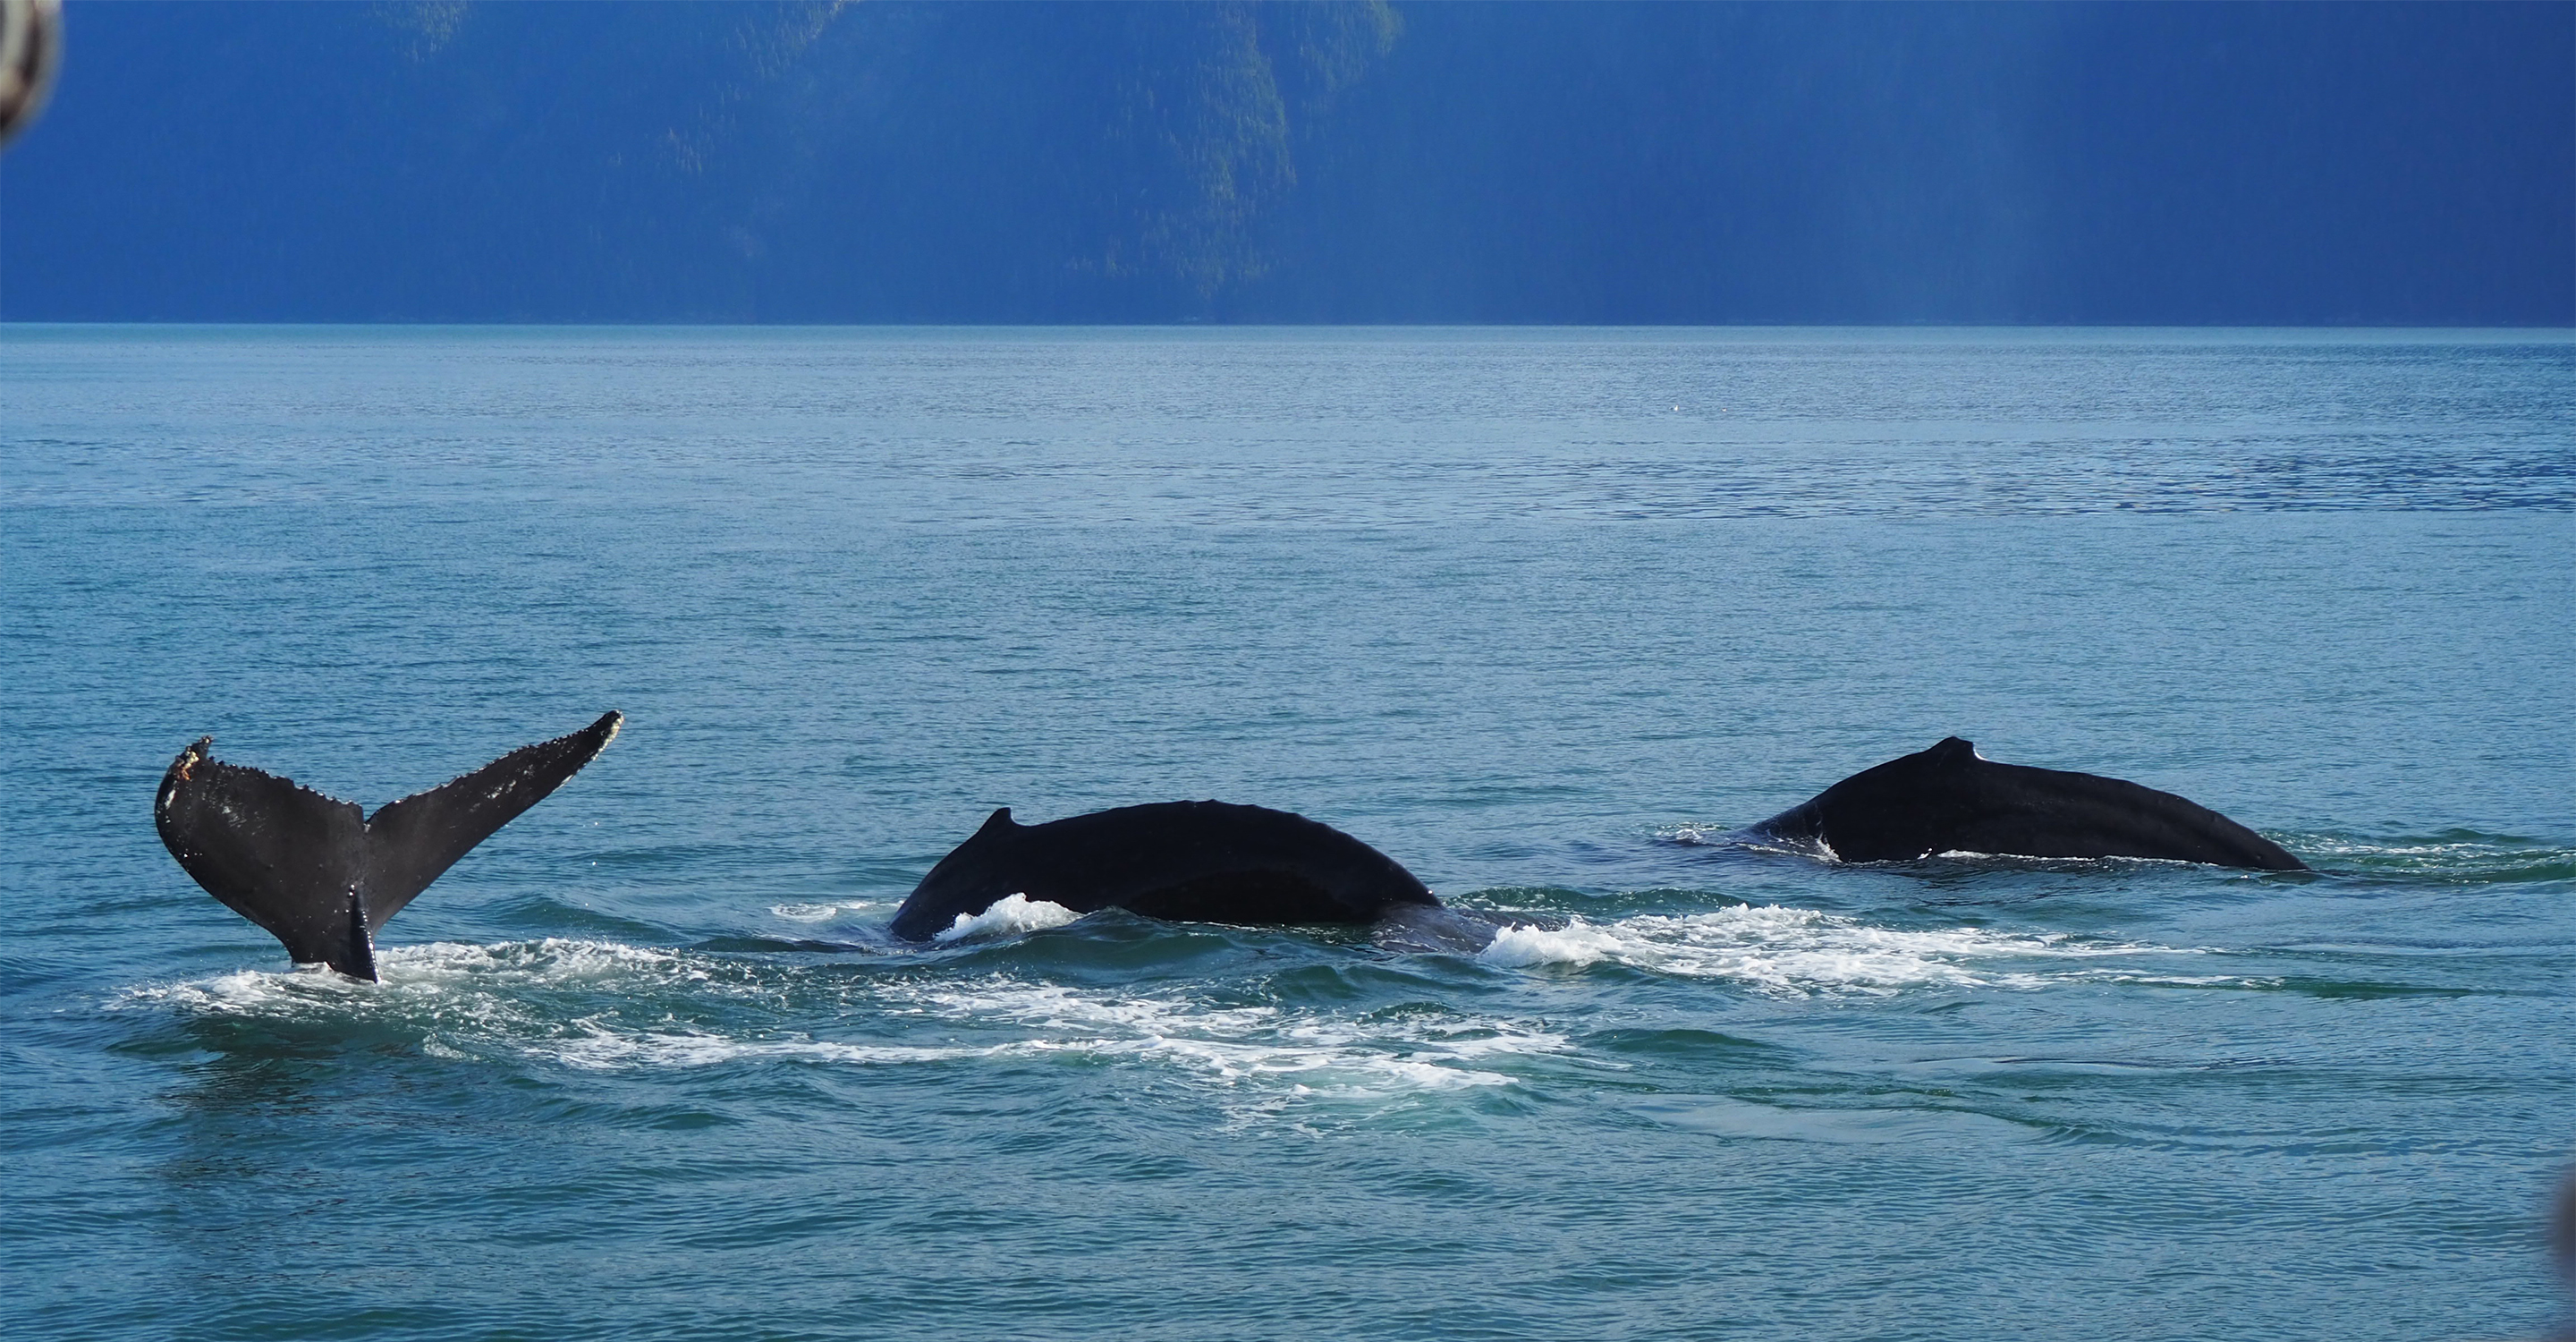 Kayaking among humpback whales in Alaska's Inside Passage.